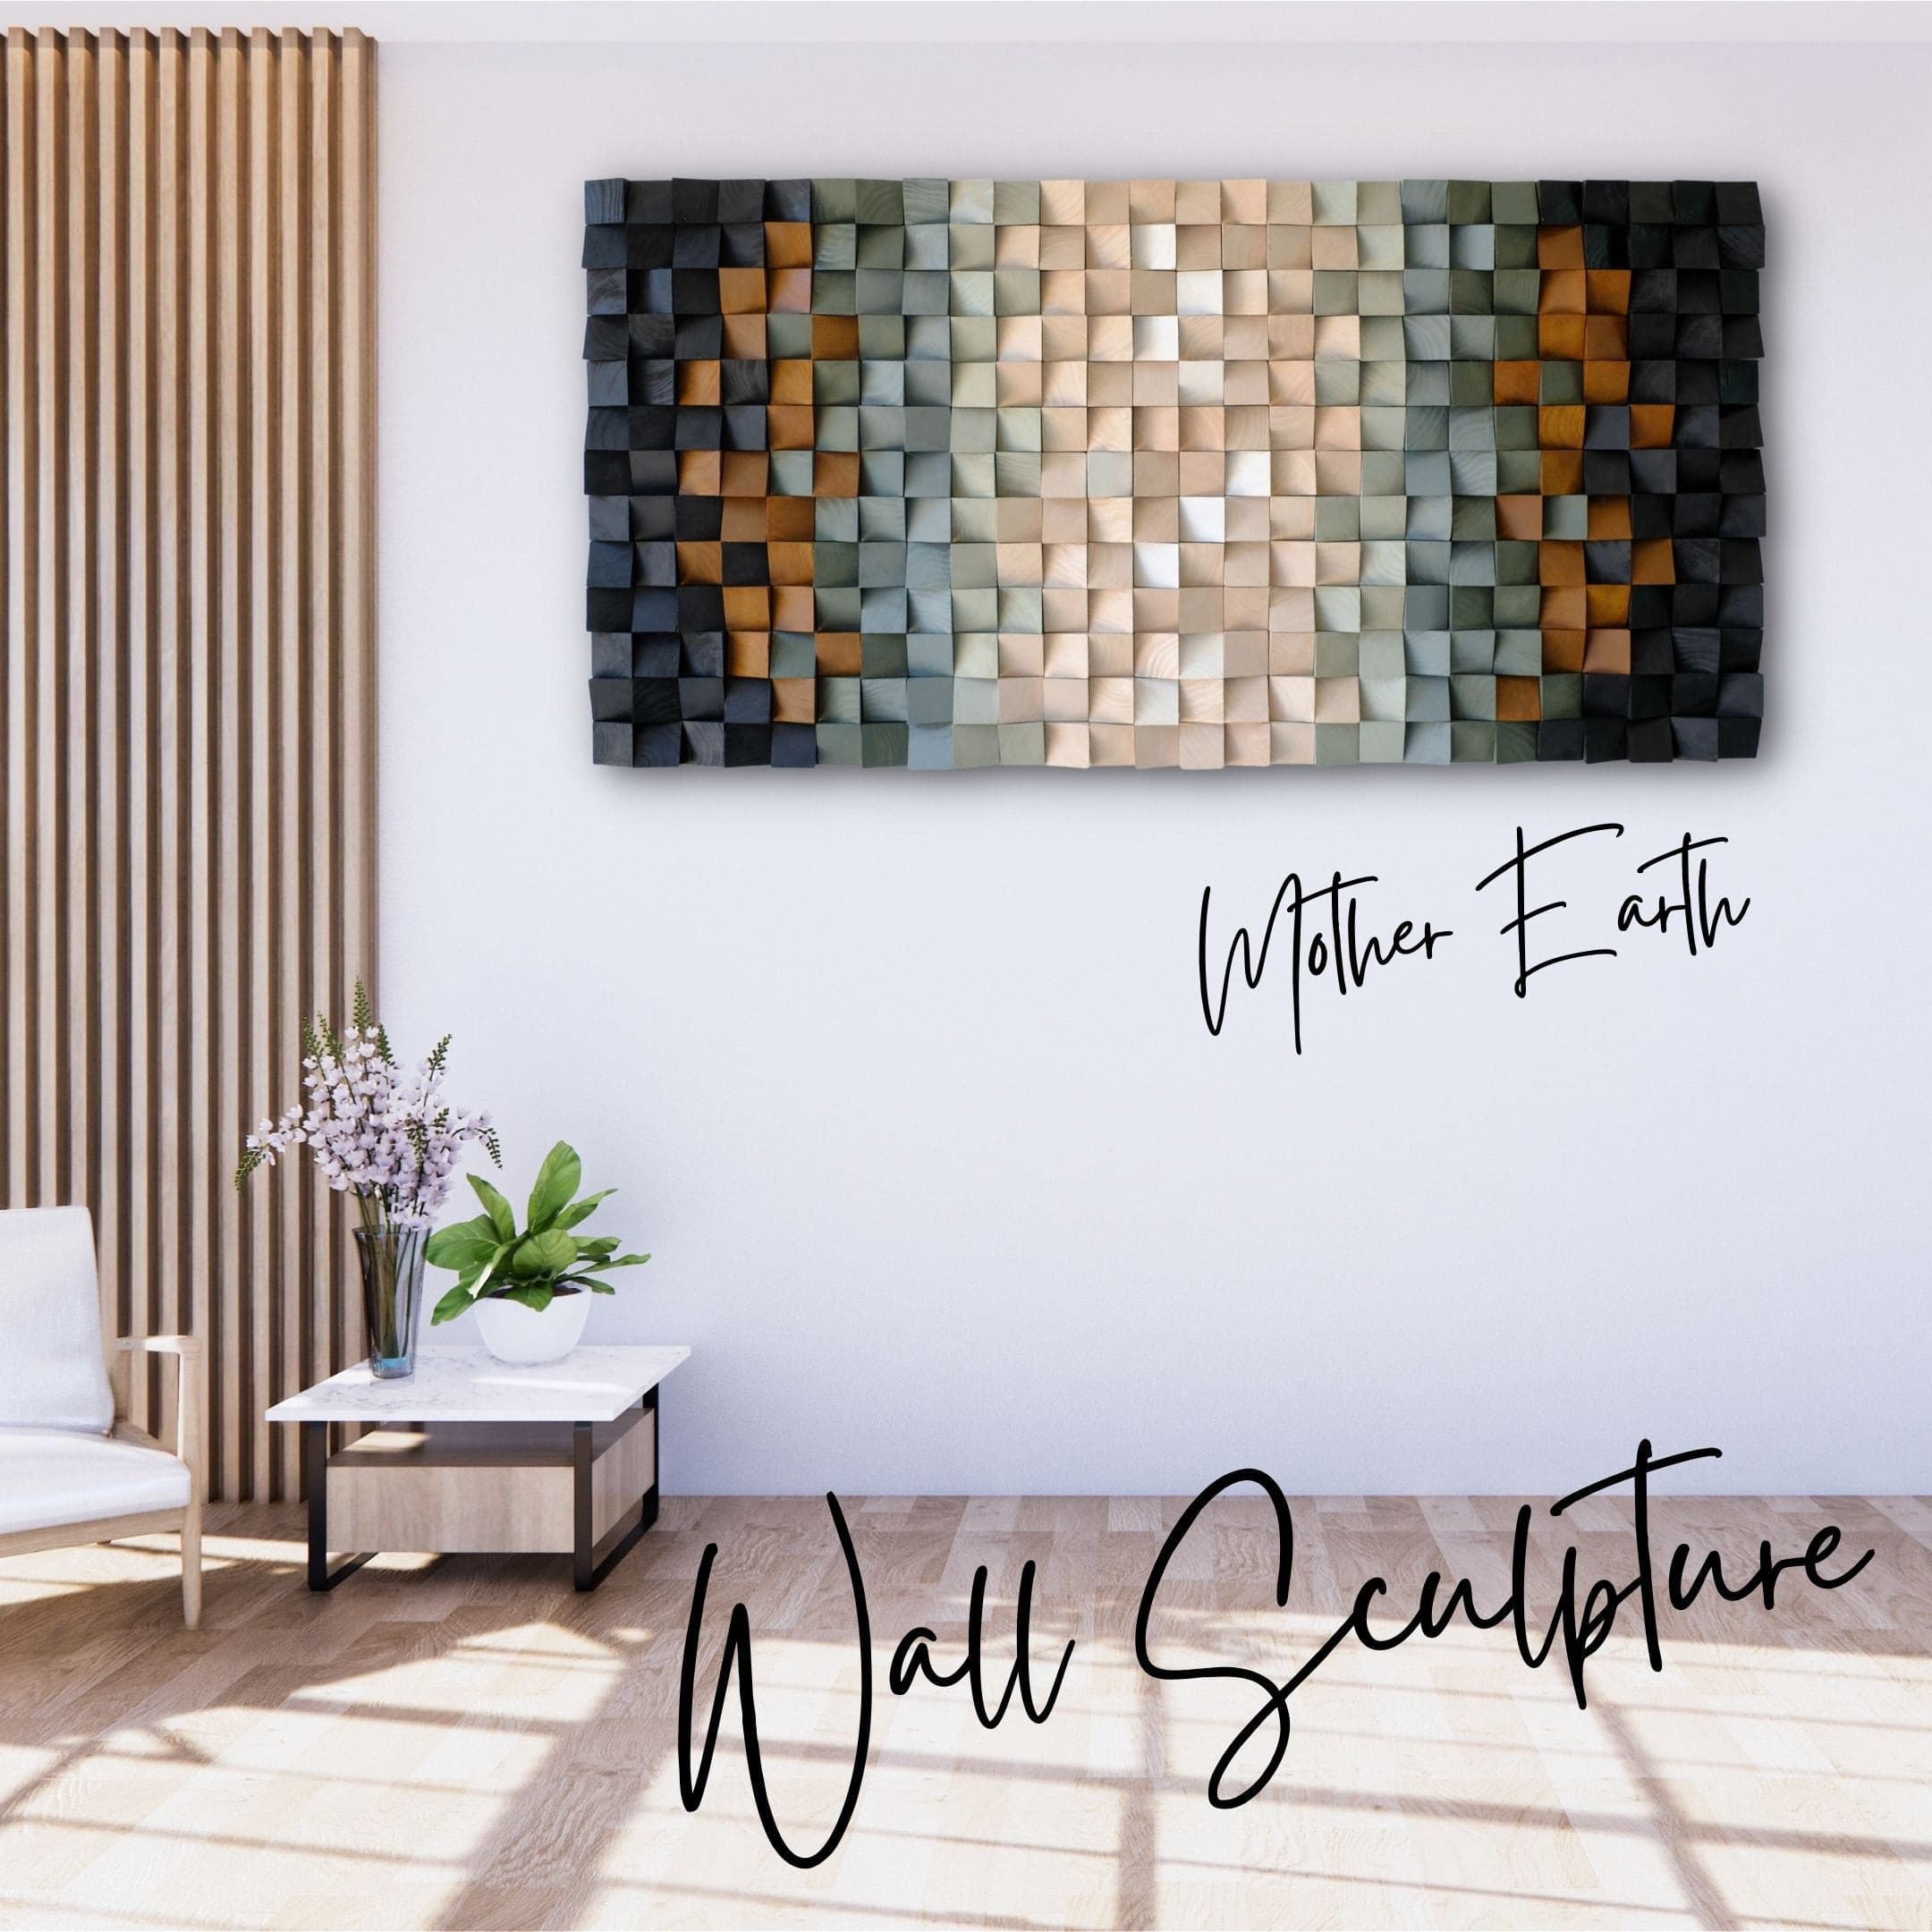 ・"Mother Earth"・Premium Wood Handmade Wall Sculpture - Limited Edition | Artdesigna Glass Printing Wall Arts.